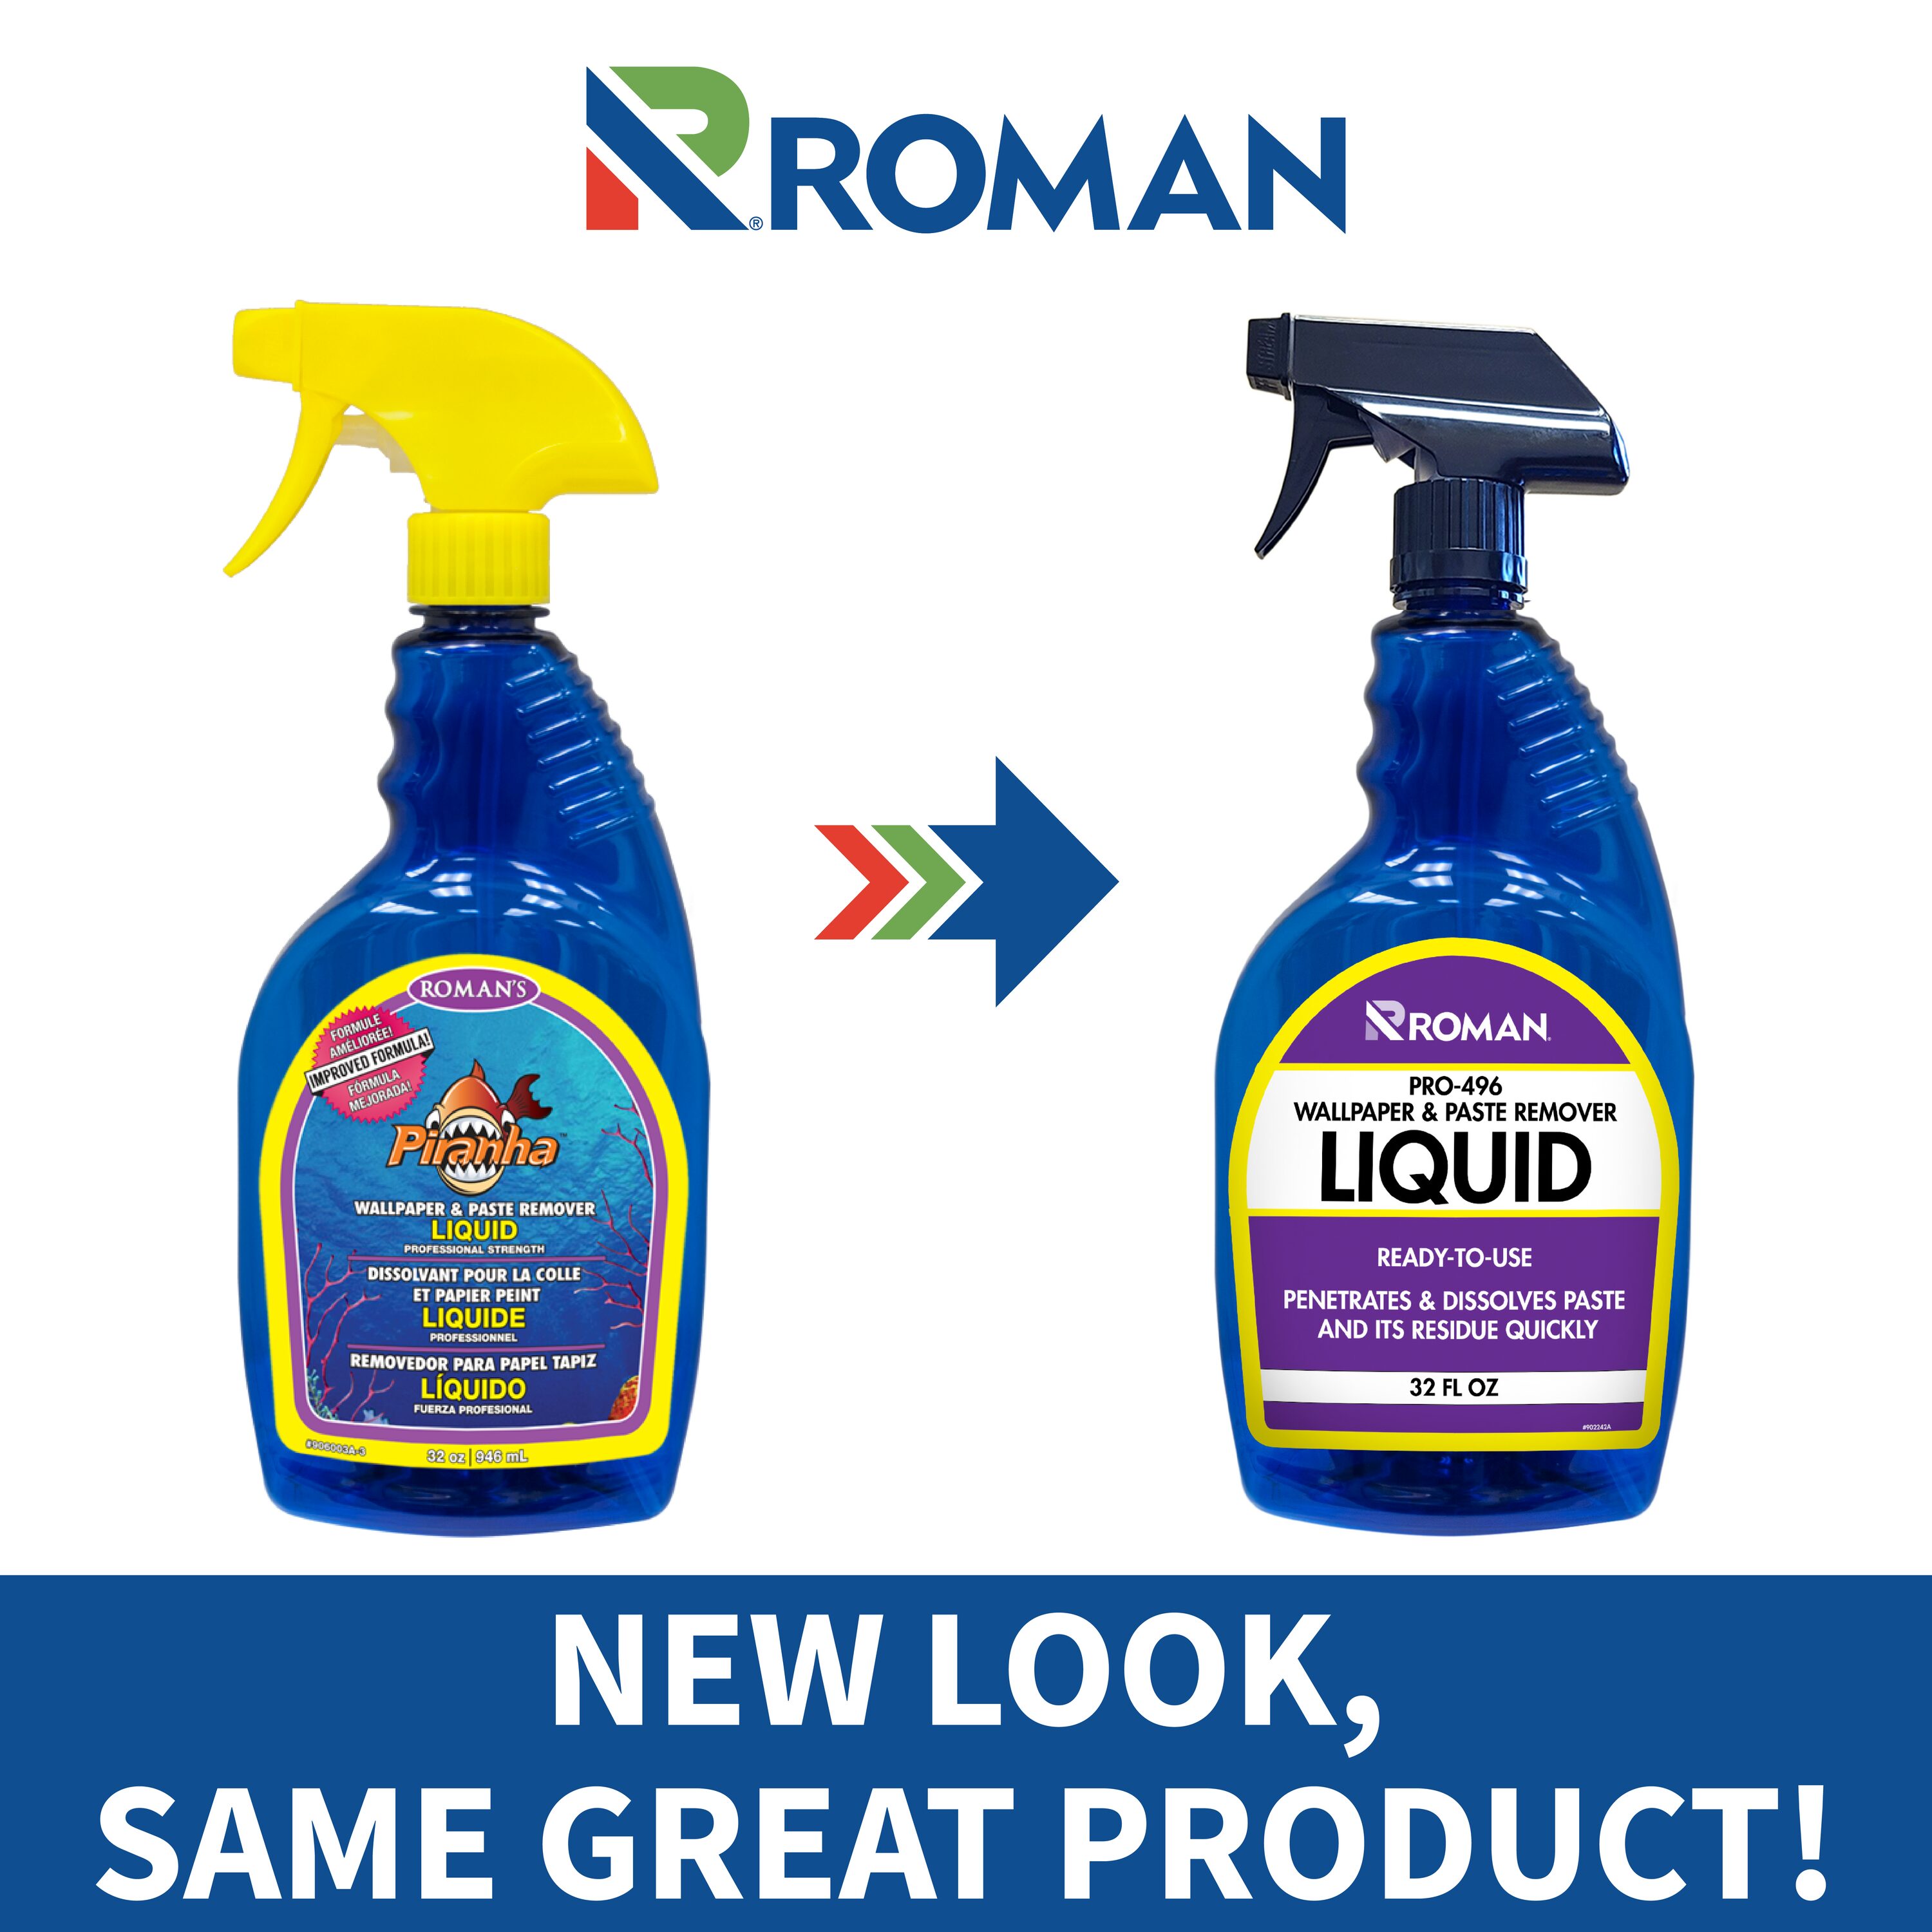 Roman PRO-543 32-oz Liquid Wallpaper Adhesive in the Wallpaper